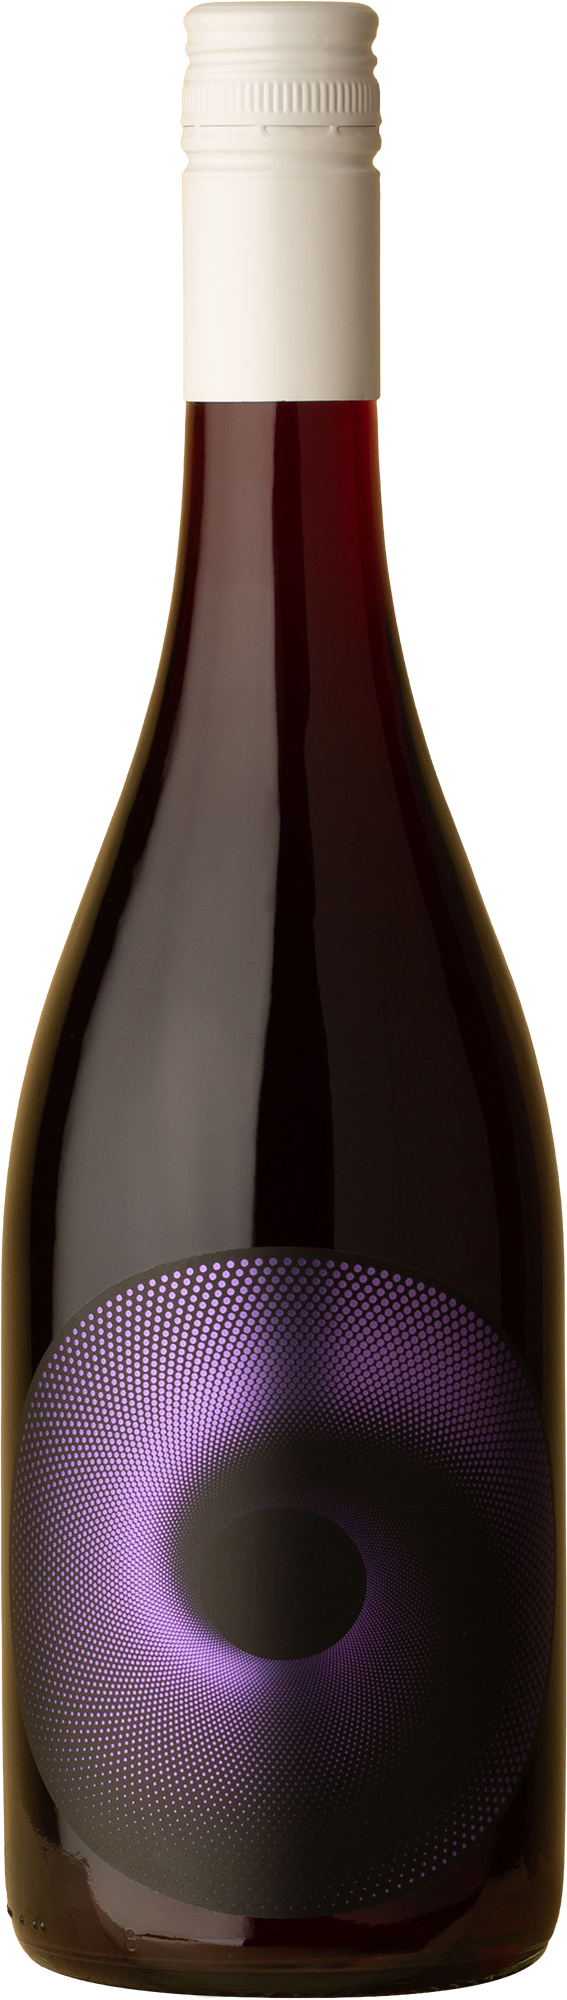 Aller Trop Loin - Space Juice Malbec Blend 2021 Red Wine